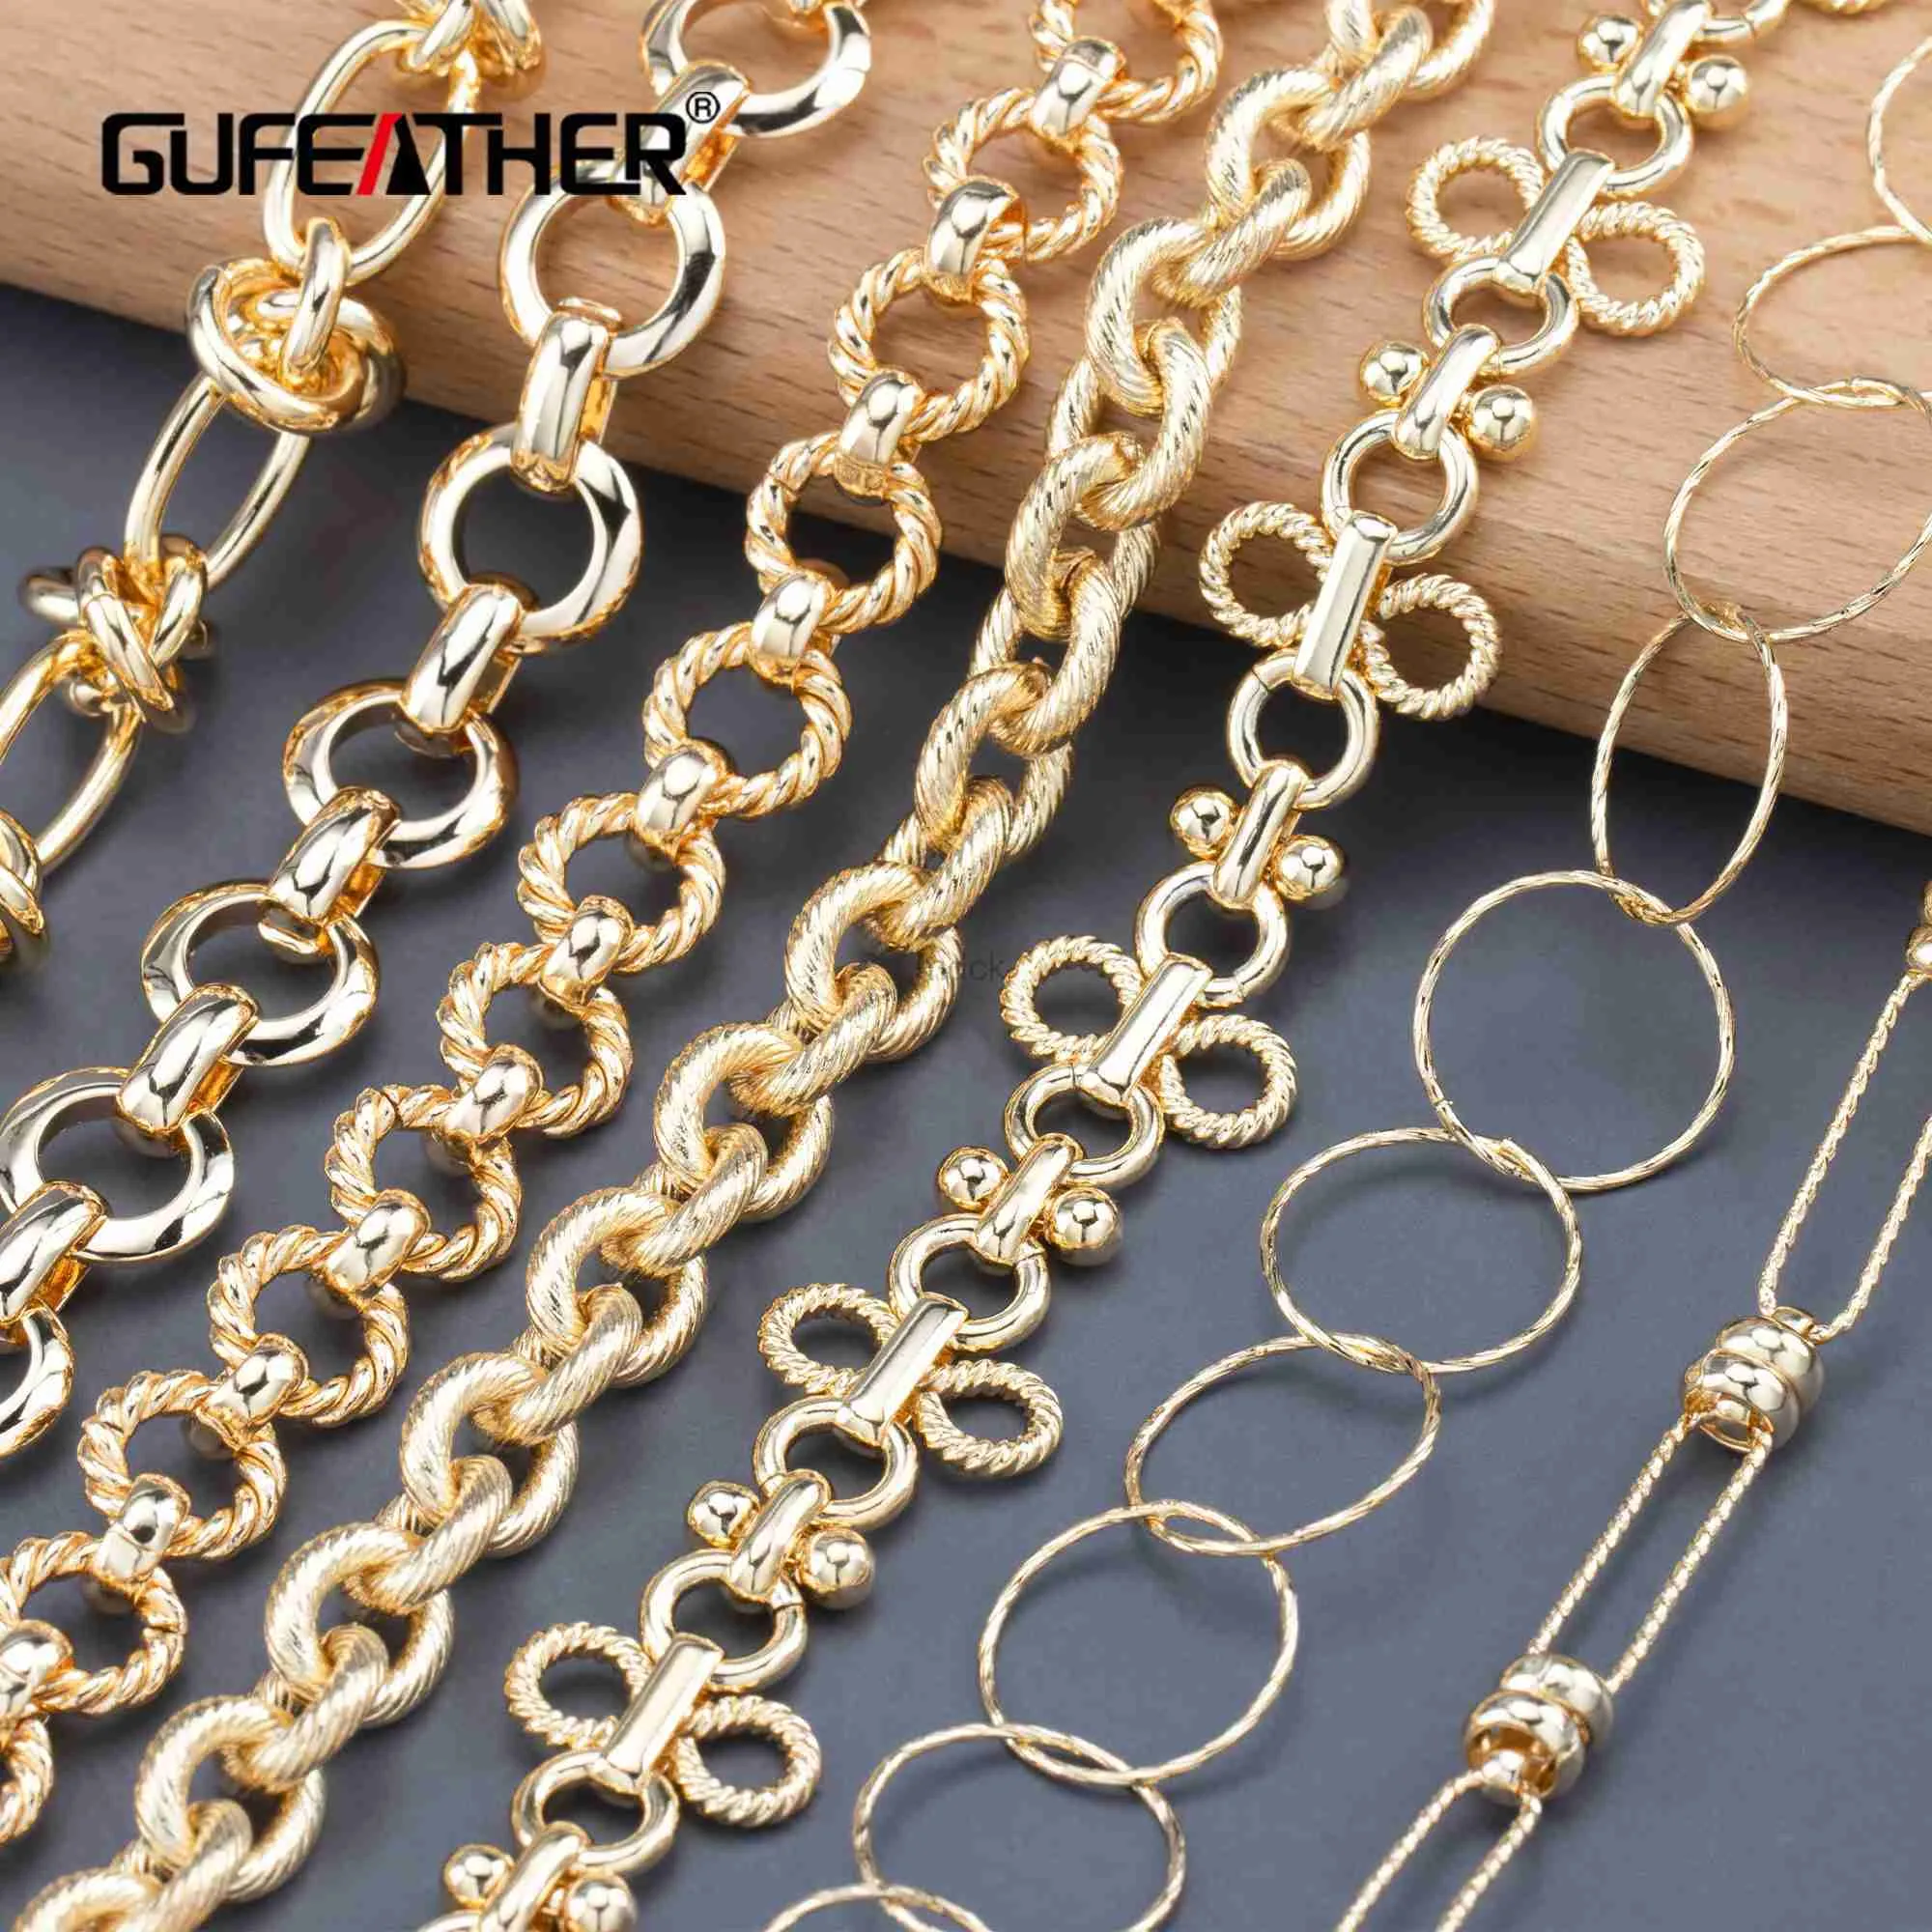 Pendant Necklaces GUFEATHER C170diy chainpass REACHnickel free18k gold platedcopper metalcharmsdiy bracelet necklacejewelry making1m/lot 240419